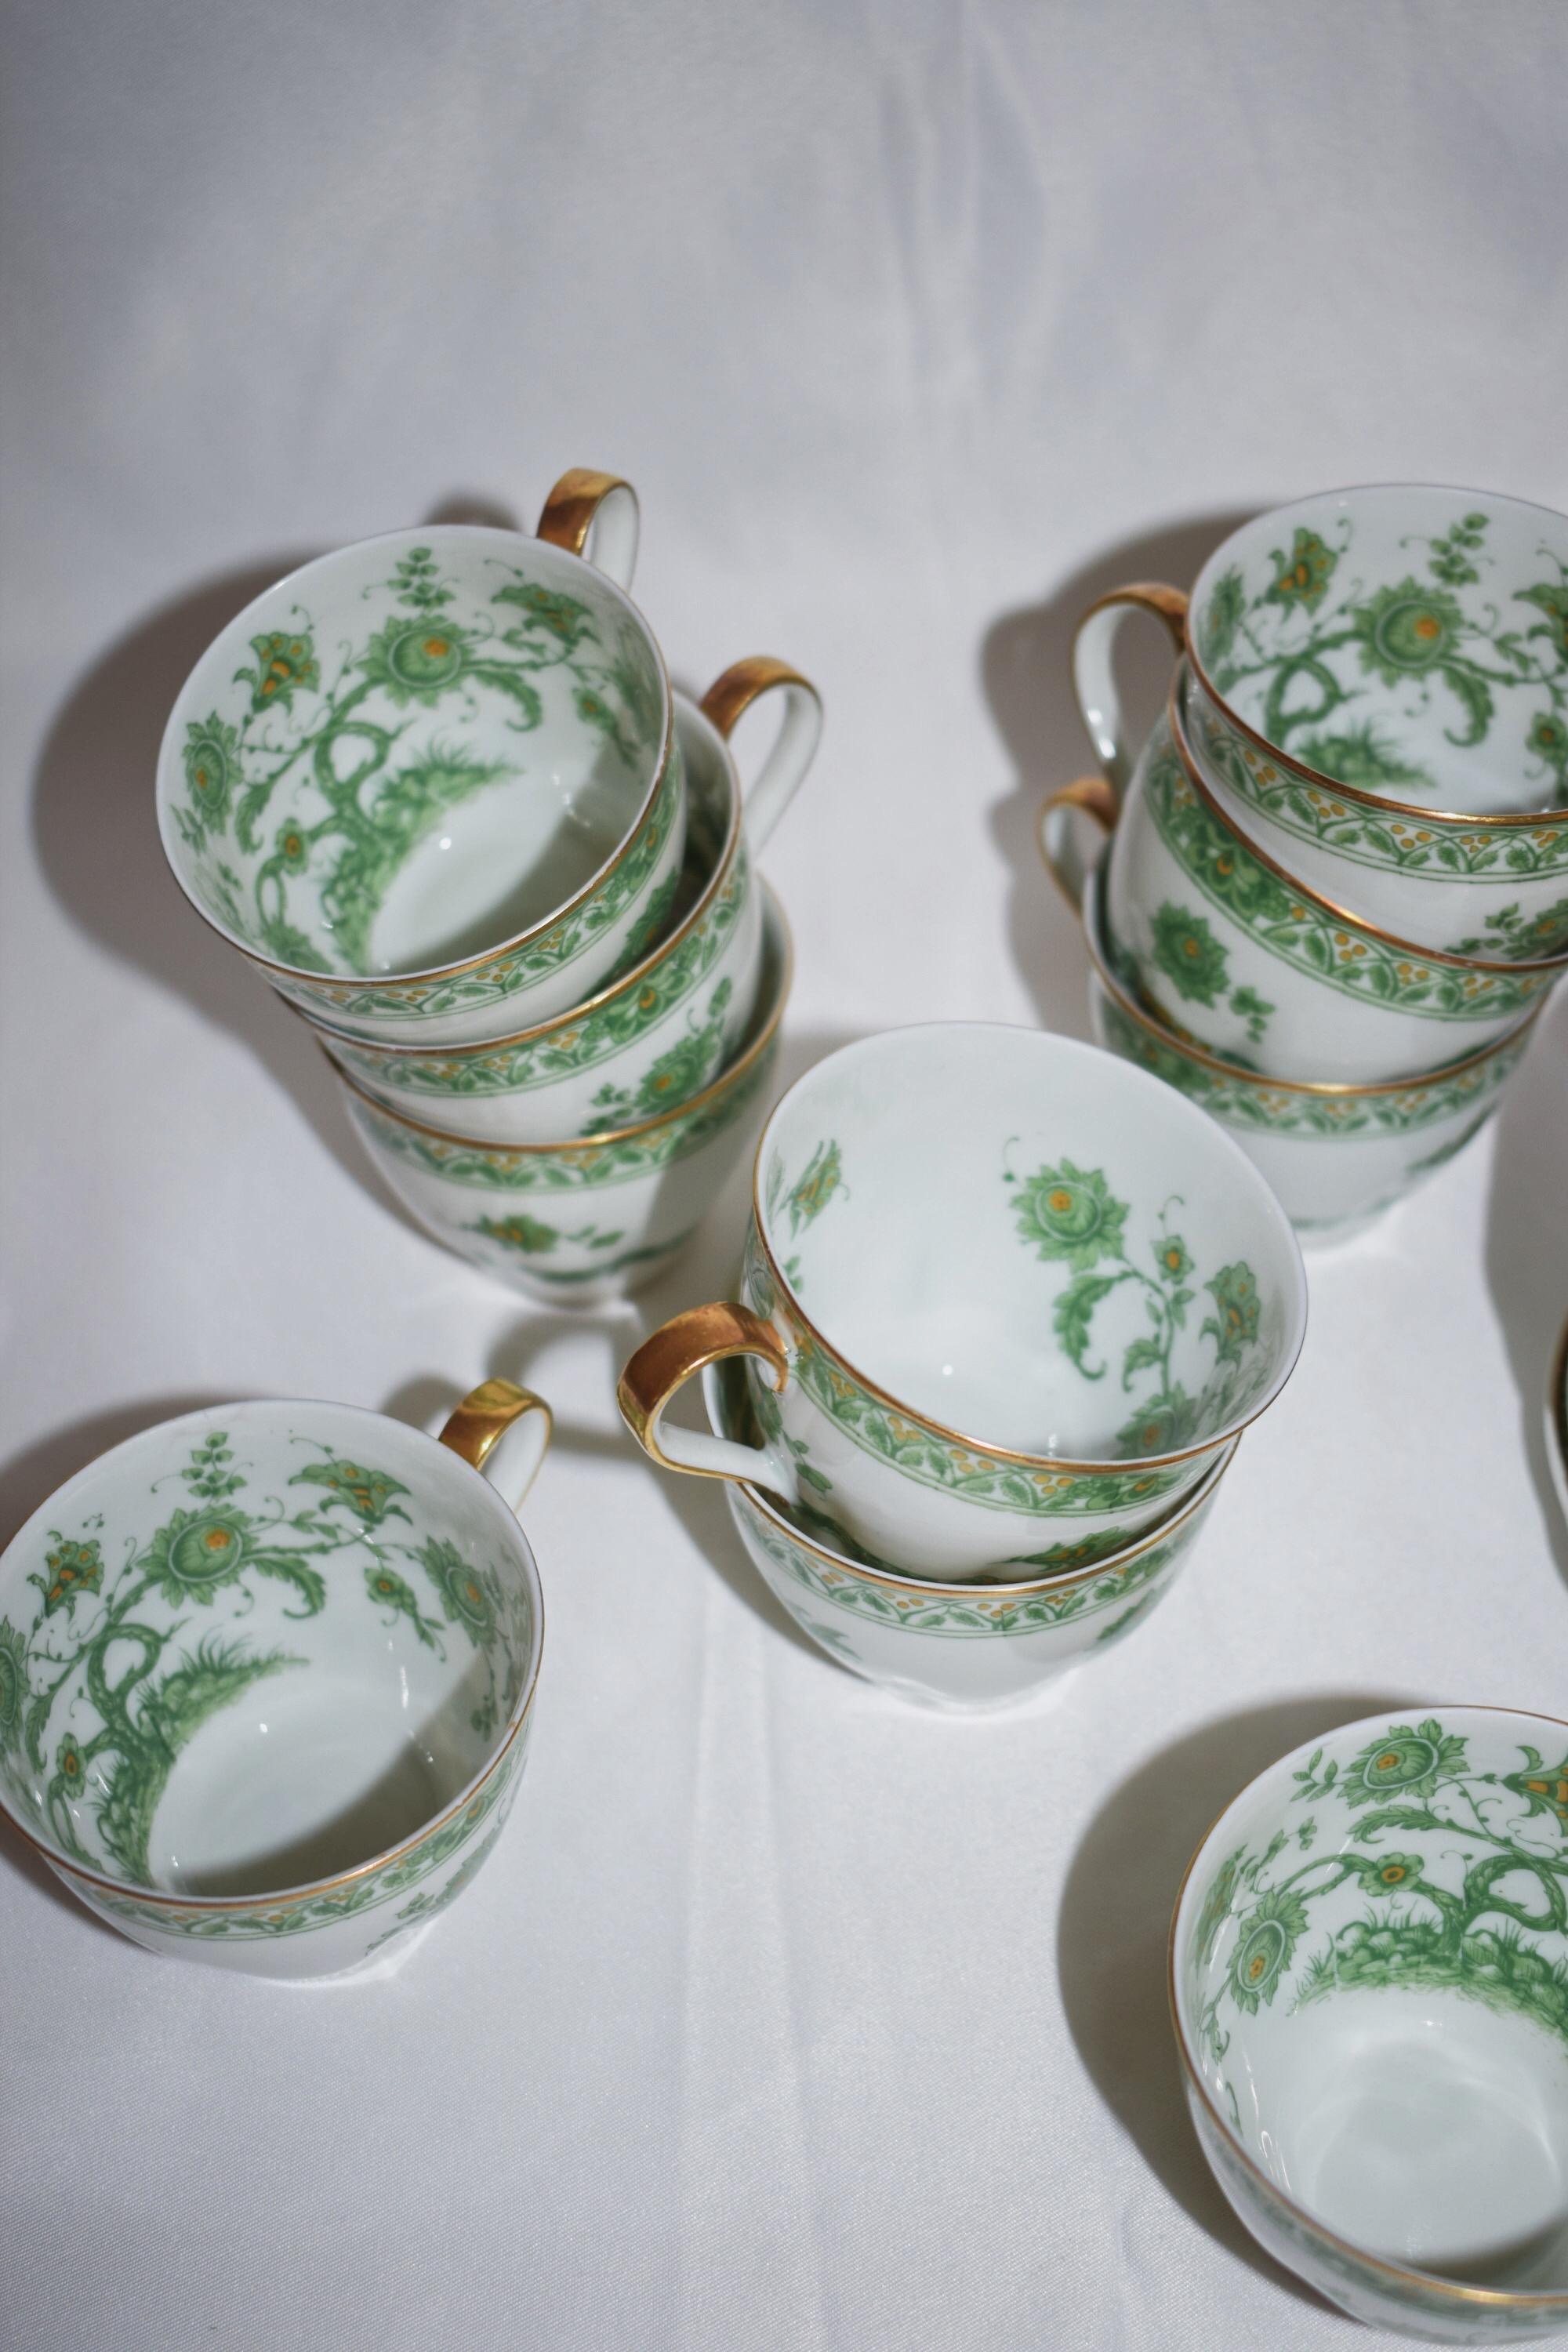 Ceramic Suite of 10 Havilland Limoges Porcelain Cashmere Green Cup and Saucer